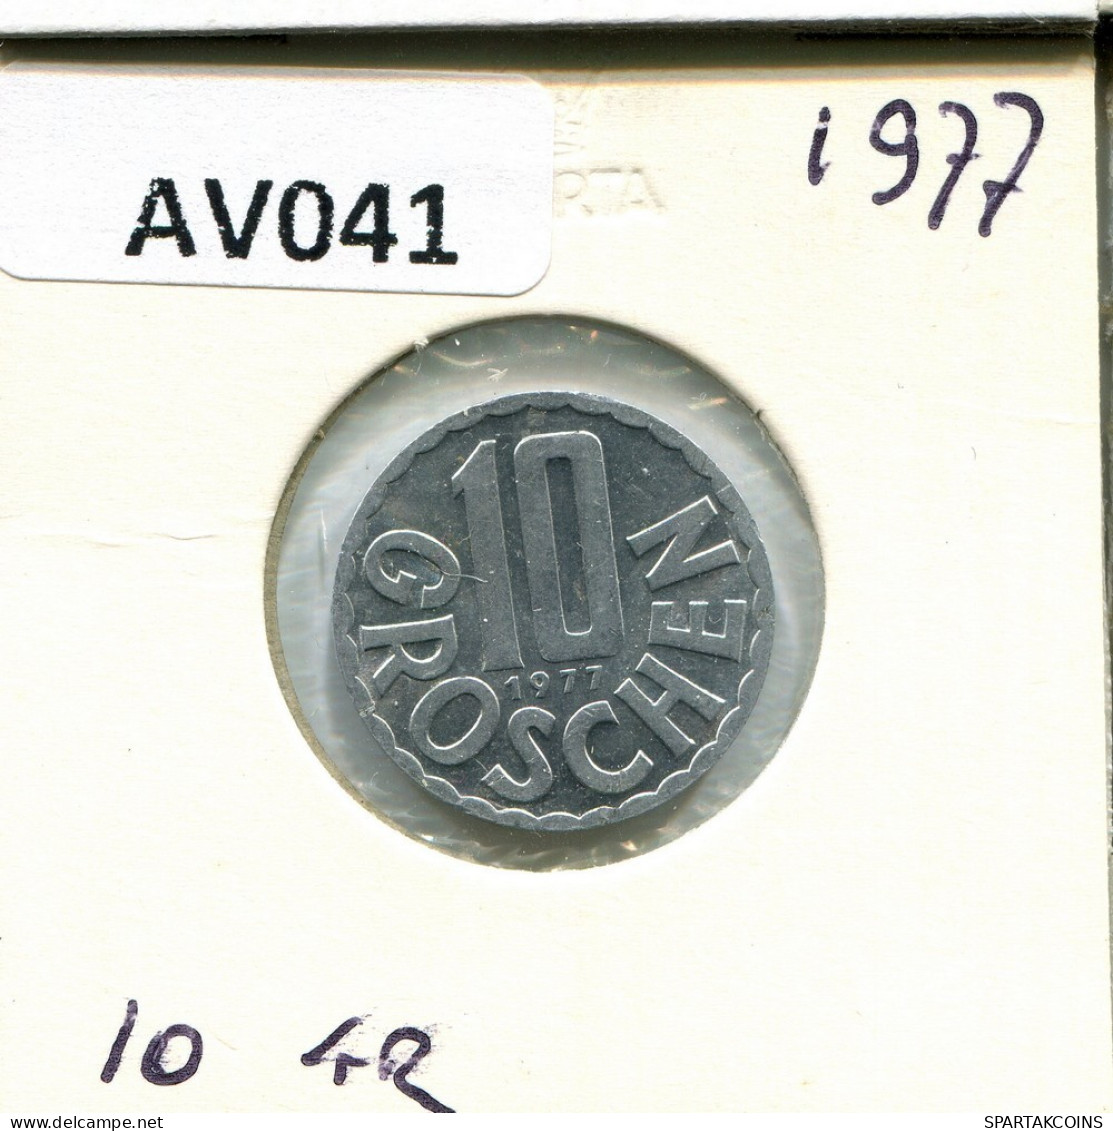 10 GROSCHEN 1977 AUSTRIA Coin #AV041.U.A - Oostenrijk